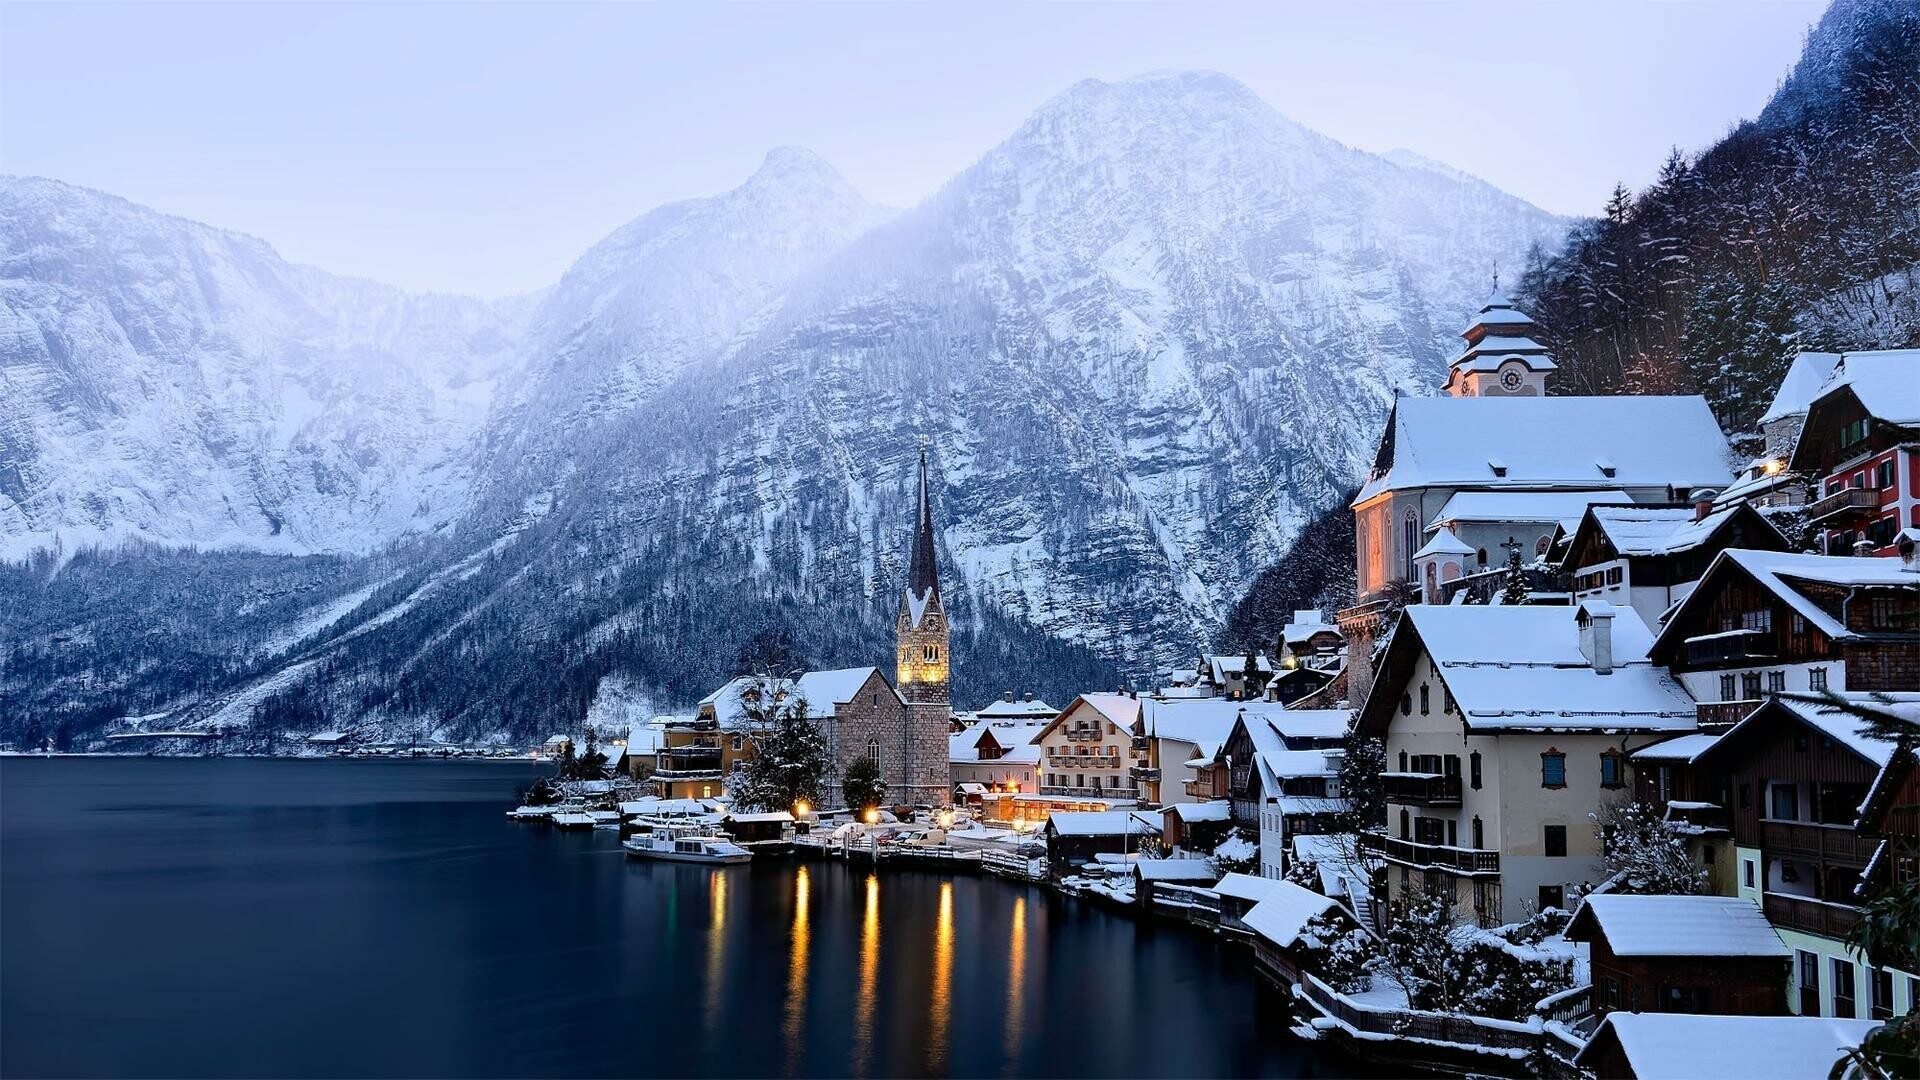 Winter: The coldest season of the year, A snowy landscape, Austria. 1920x1080 Full HD Wallpaper.